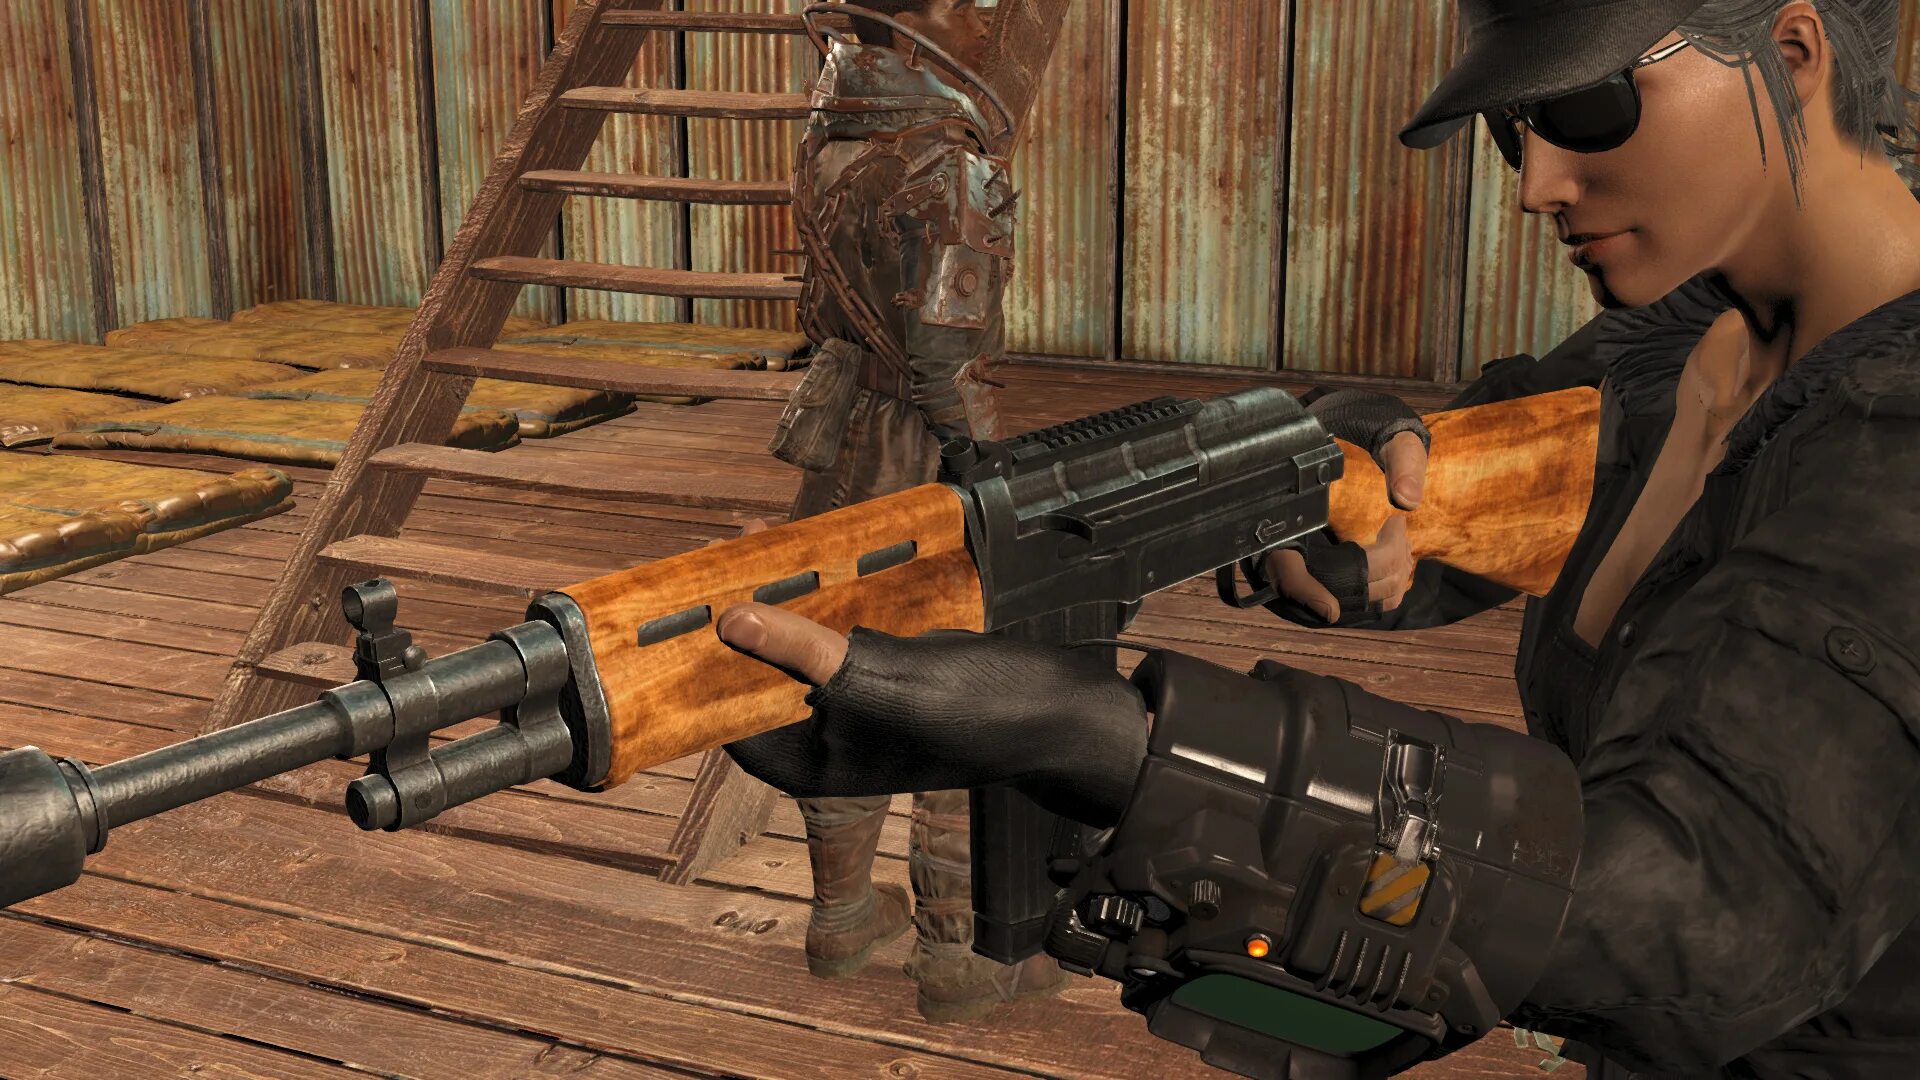 Https www fallout4 mods com. Fallout 4 Rifle. Fallout 4 Rifle Mod. Боевая винтовка Fallout 4. Фоллаут 4 винтовка.